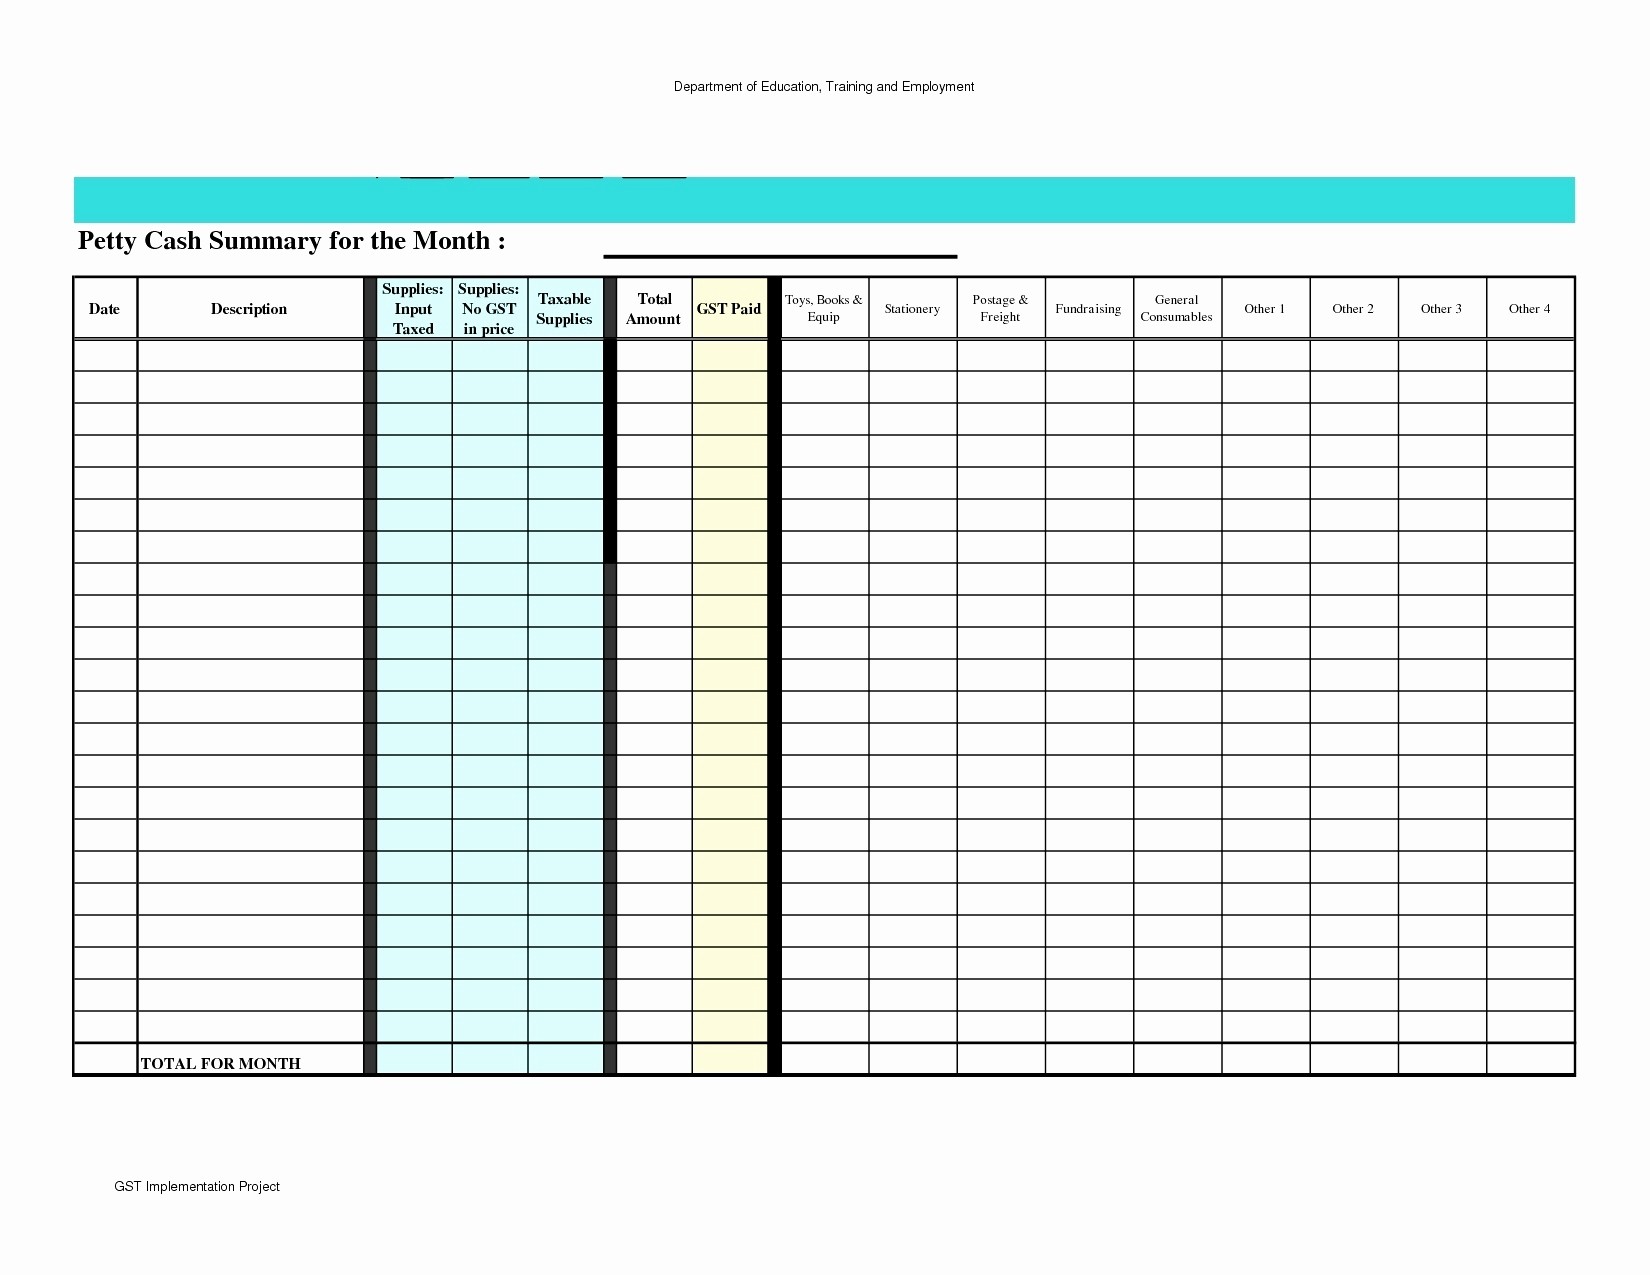 Lularoe Accounting Lovely Spreadsheet New Document Spreadsheets